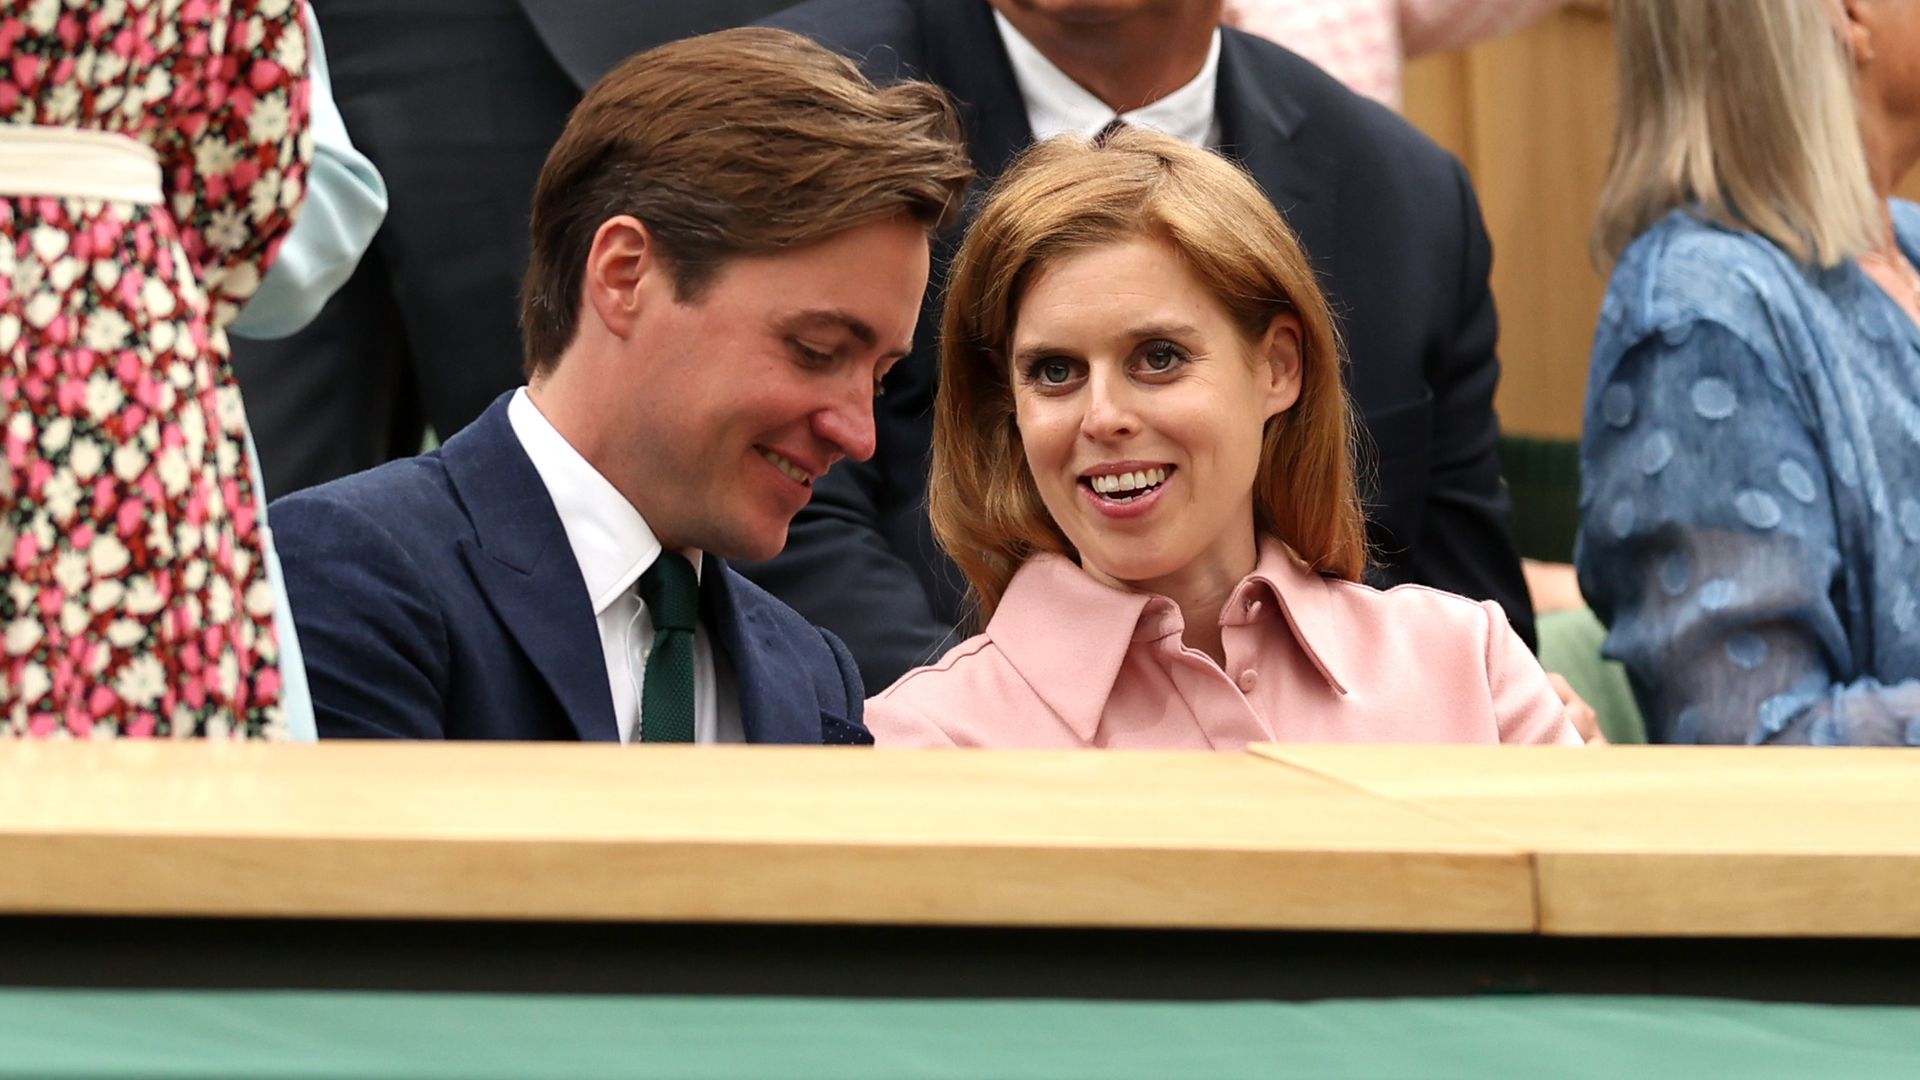 Princess Beatrice and Edoardo Mapelli Mozzi shared a joke at Wimbledon